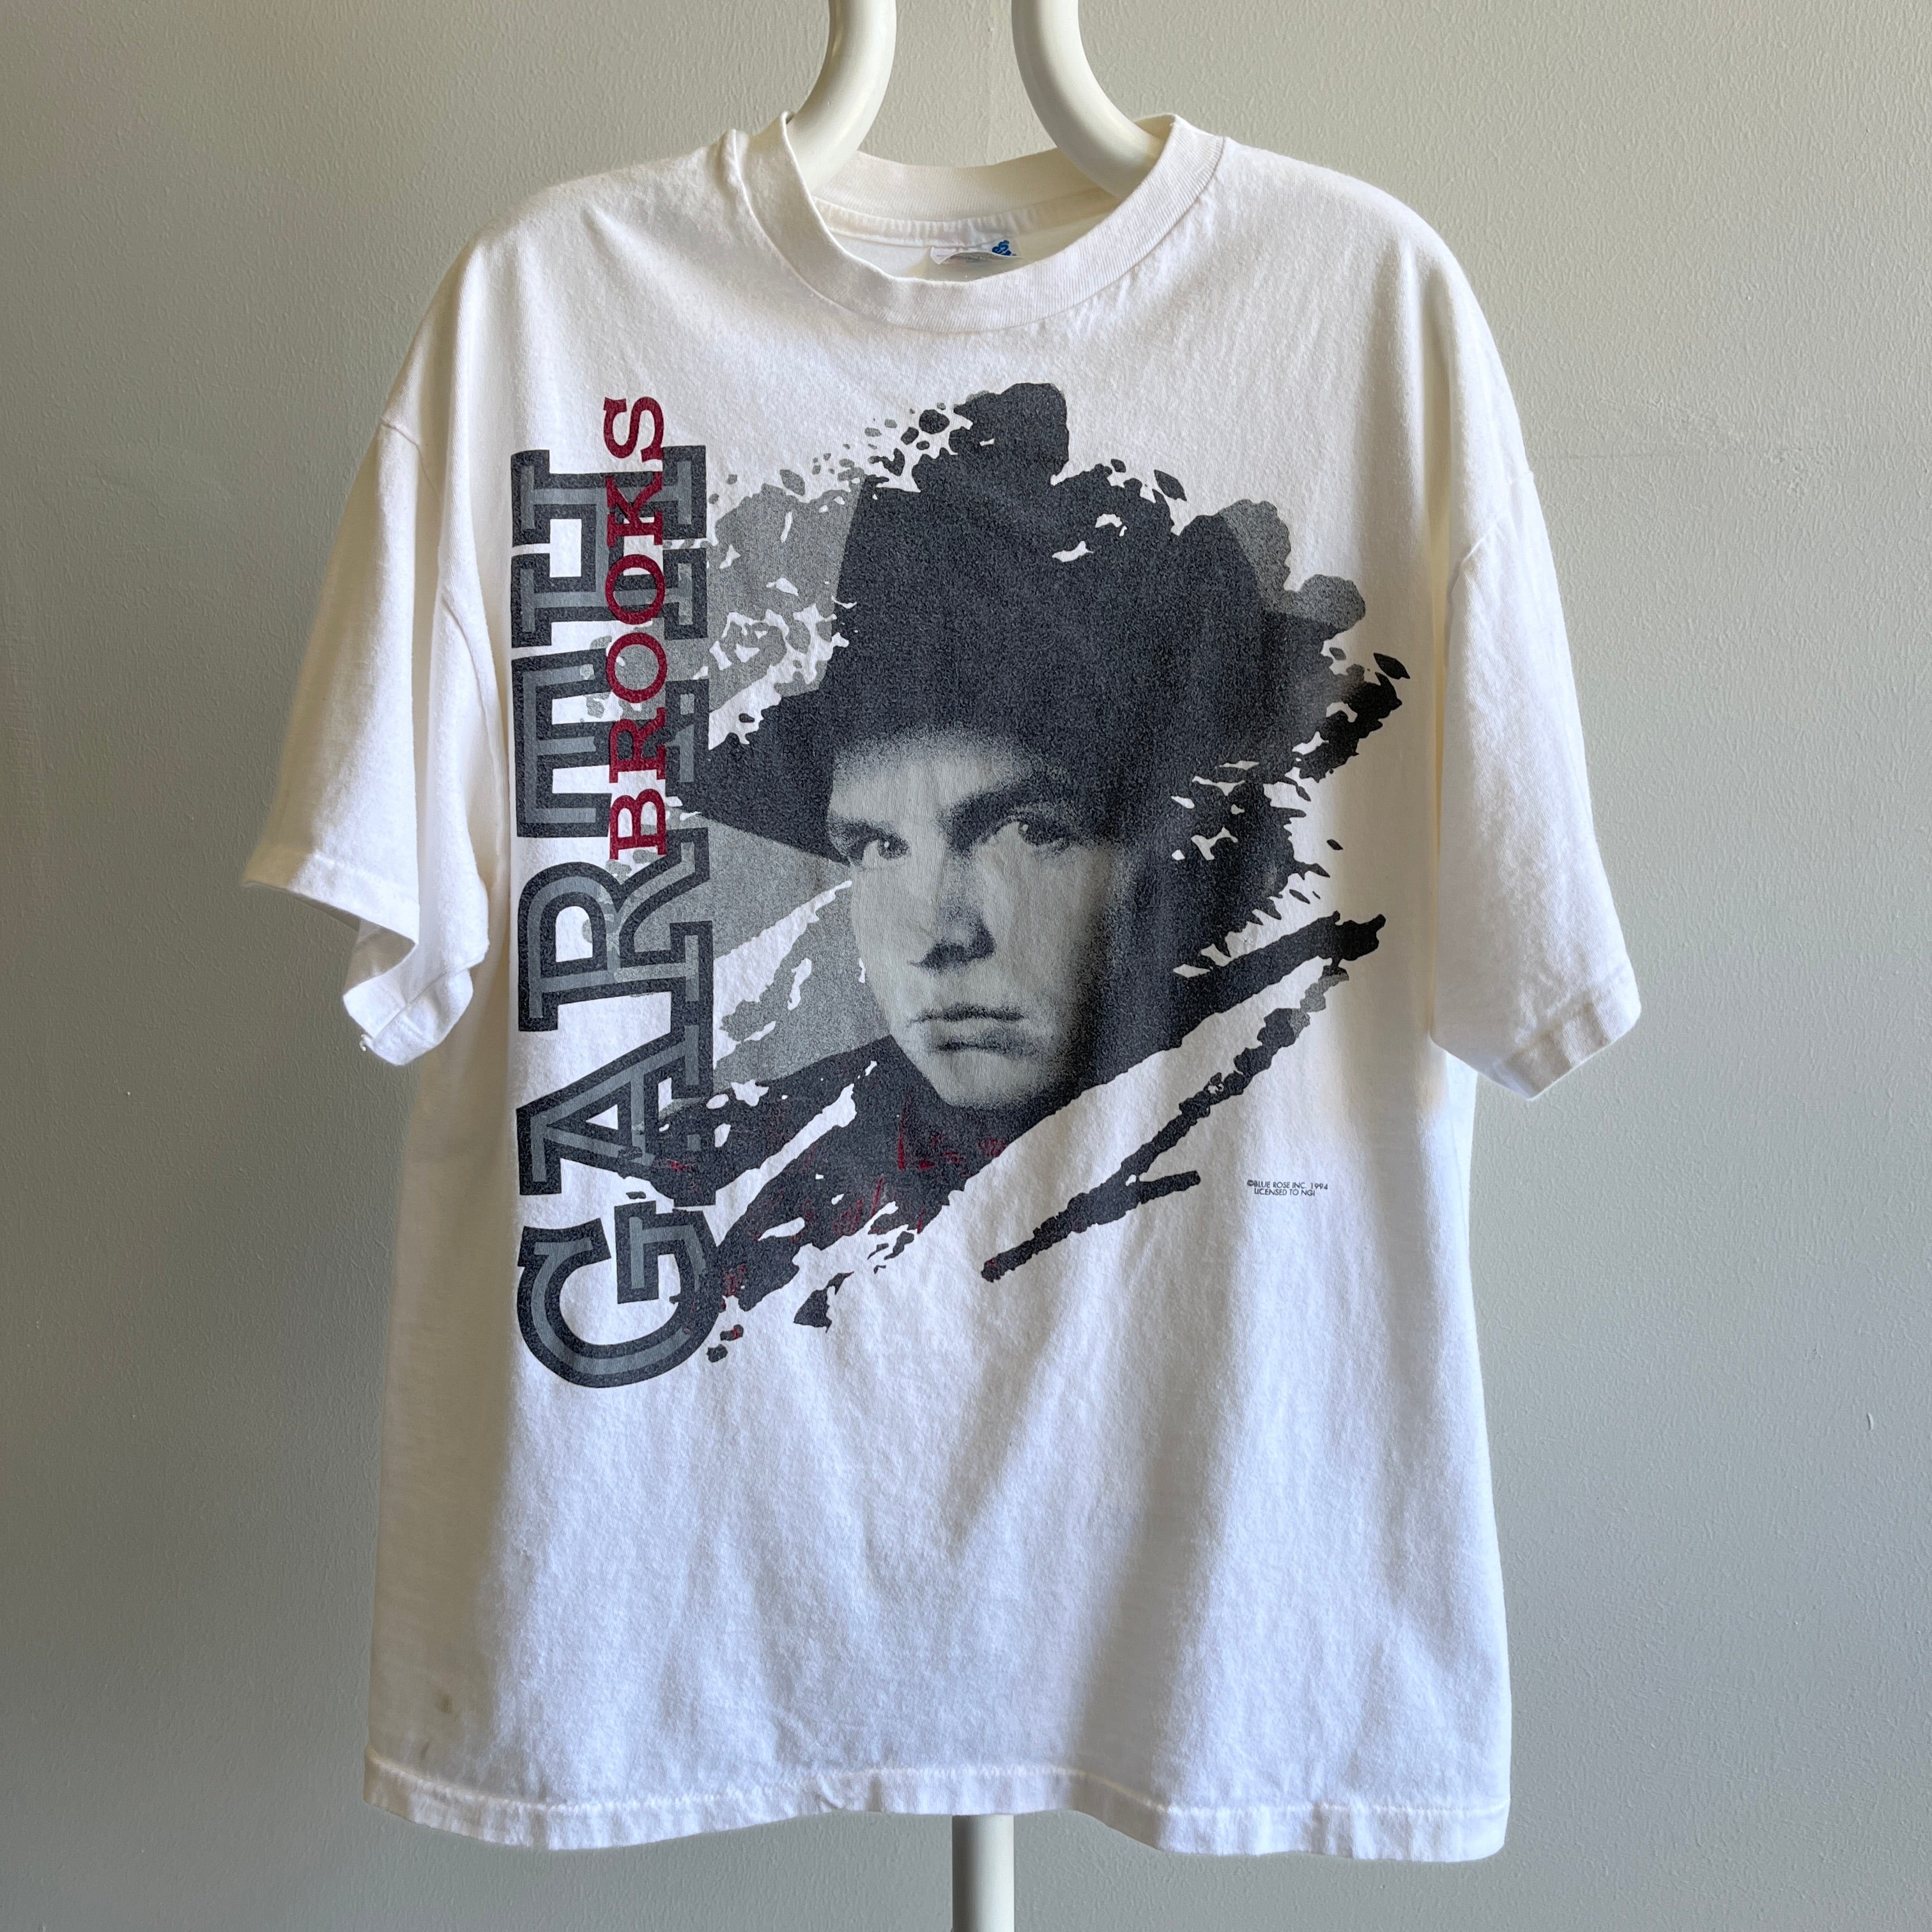 1994 Garth Brooks Tour T-Shirt